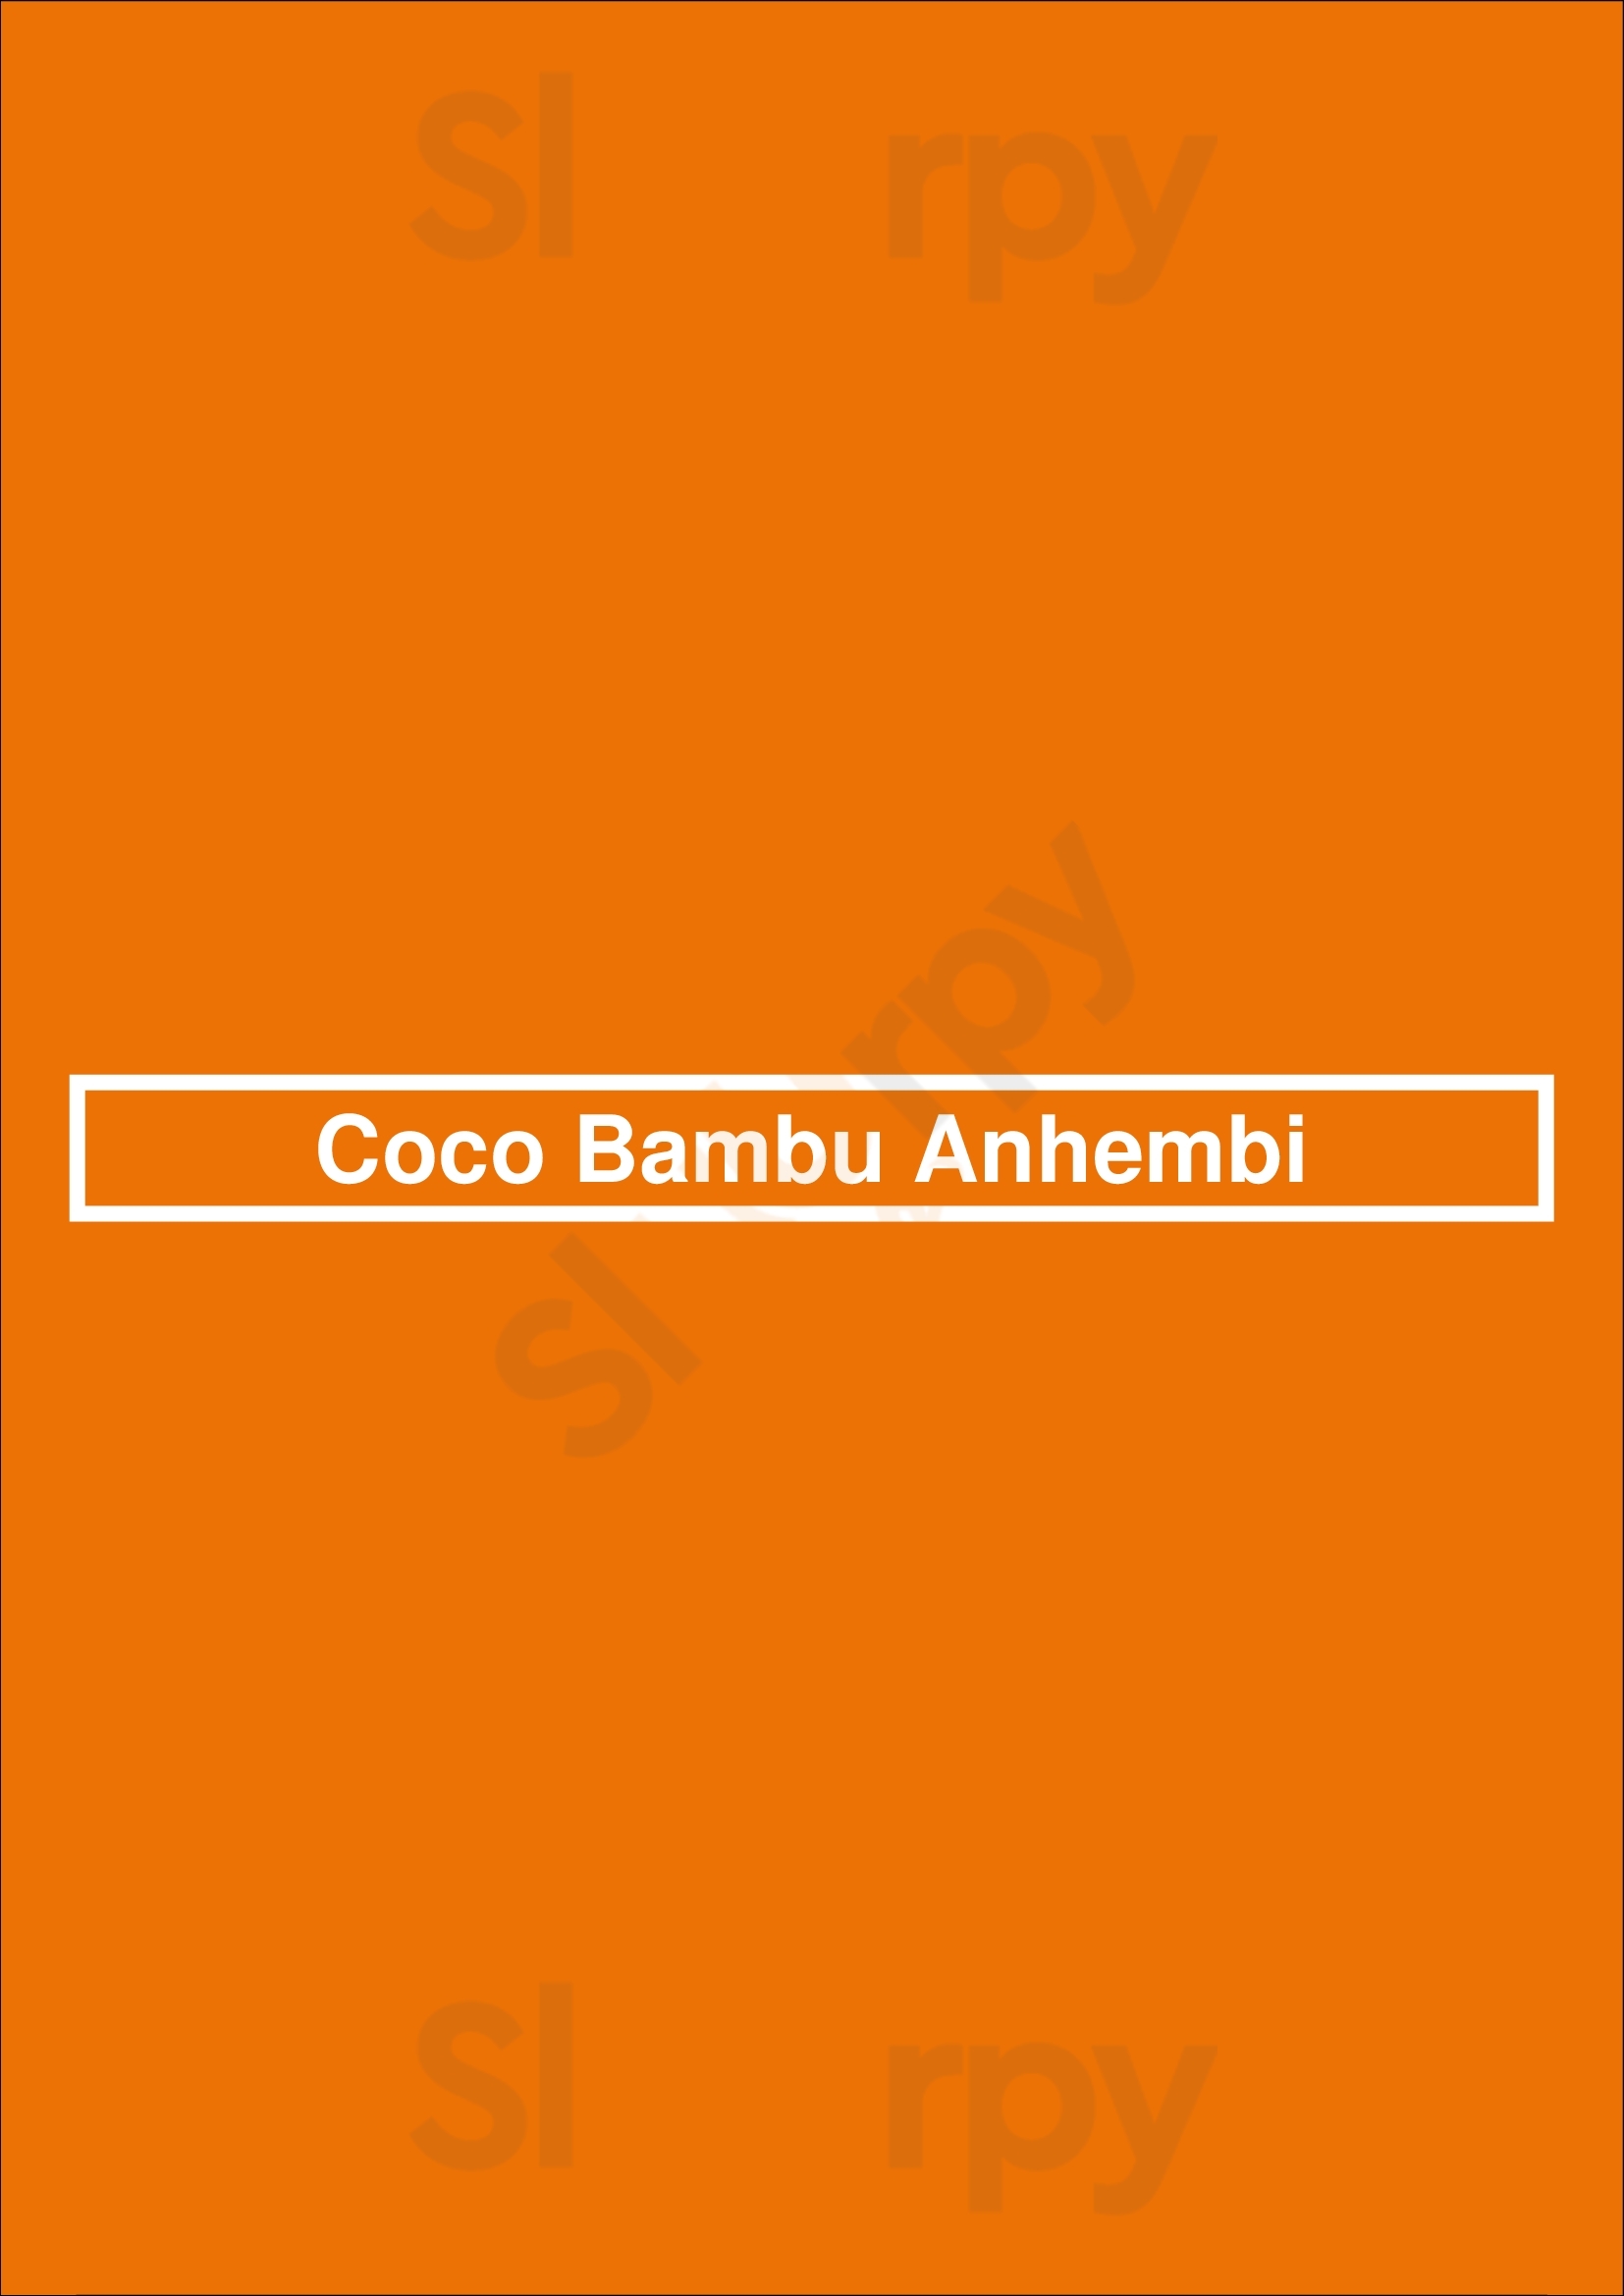 Coco Bambu Anhembi São Paulo Menu - 1